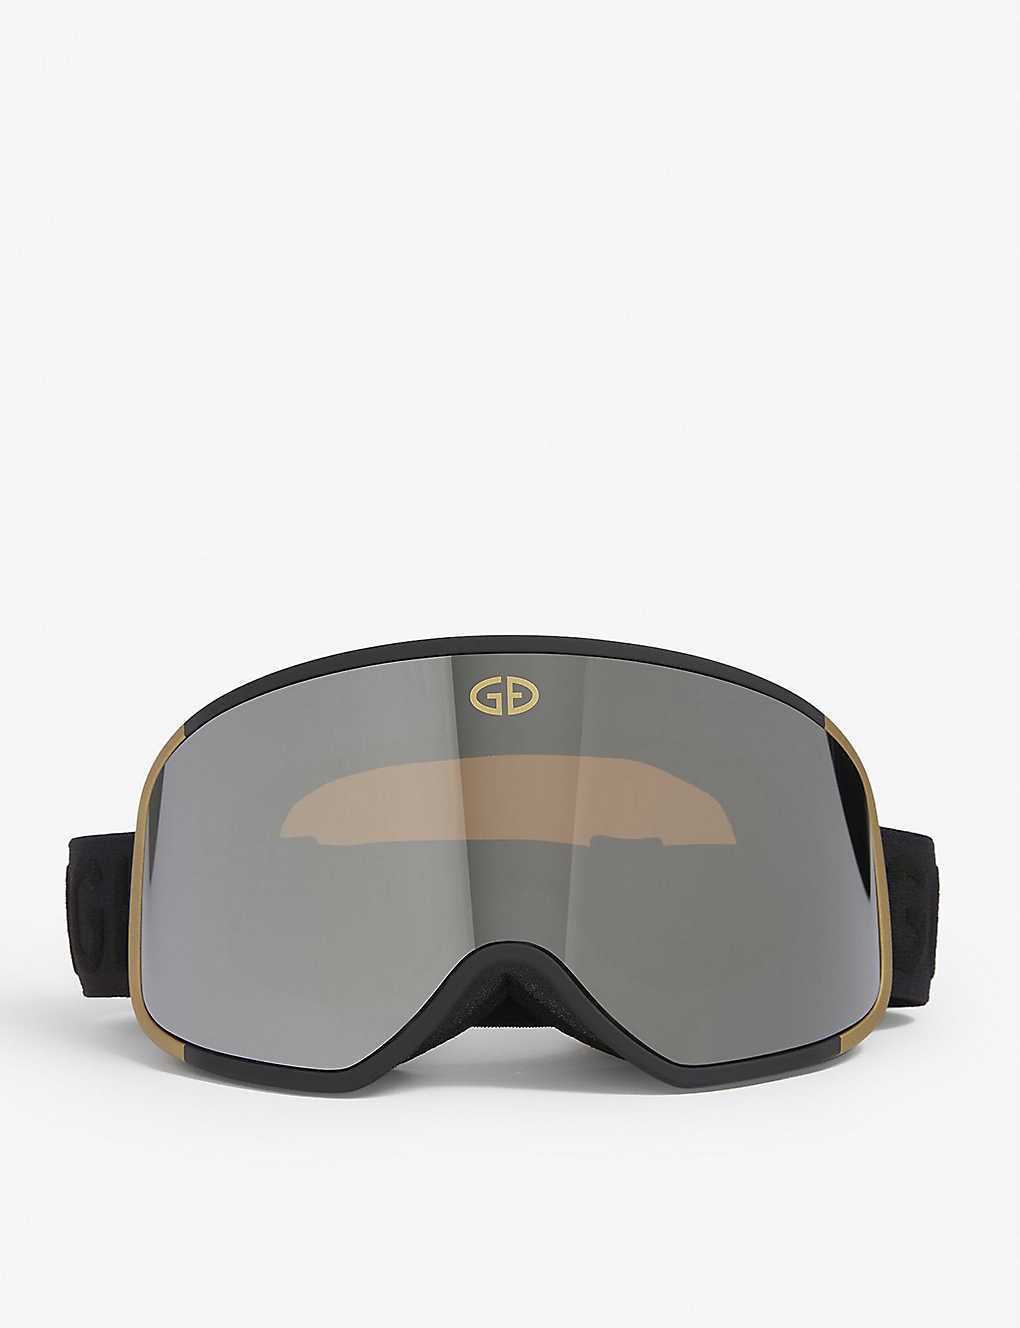 Cool branded ski goggles | Selfridges